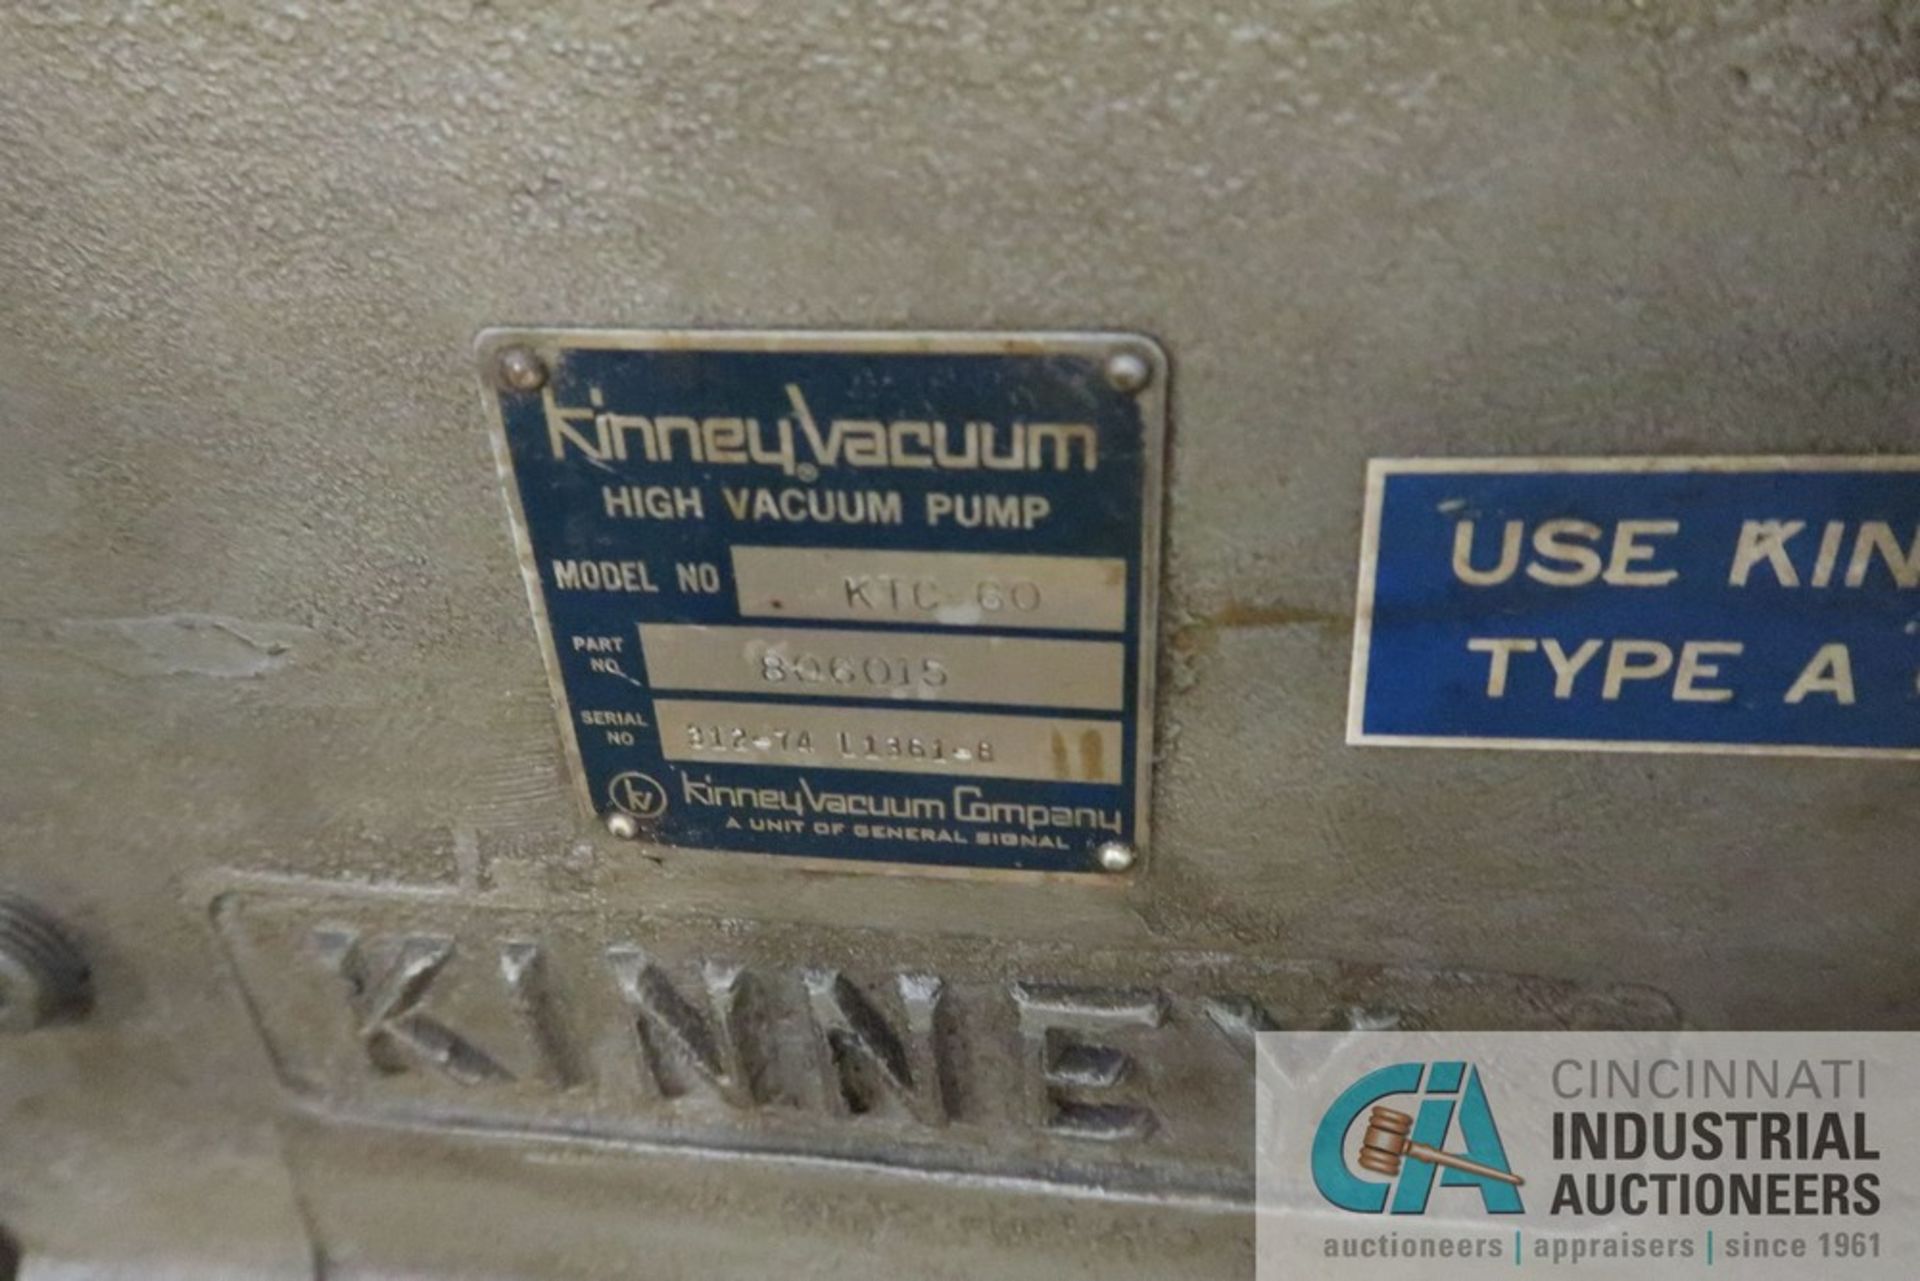 KINNEY MODEL KTC60 COMBINATION VACUUM PUMP; S/N 312-74-L-1361-8 - Image 10 of 11